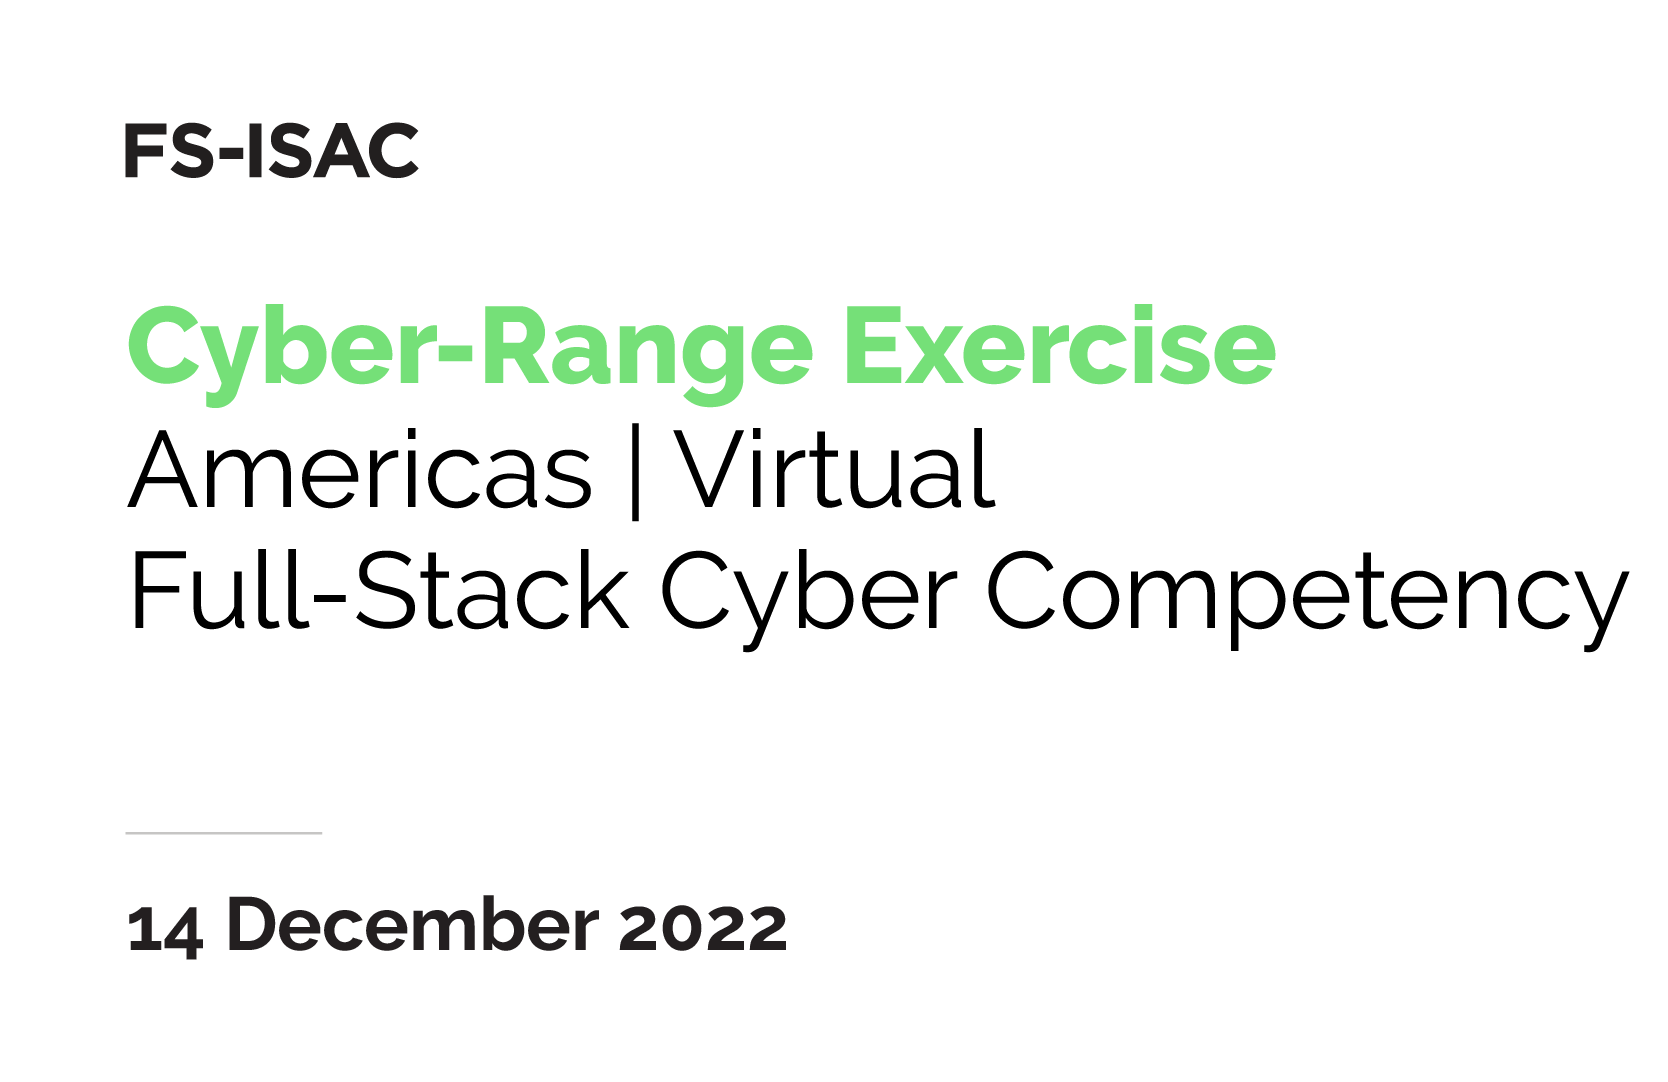 FS-ISAC Cyber Range Exercise | Full-Stack Americas | December 2022